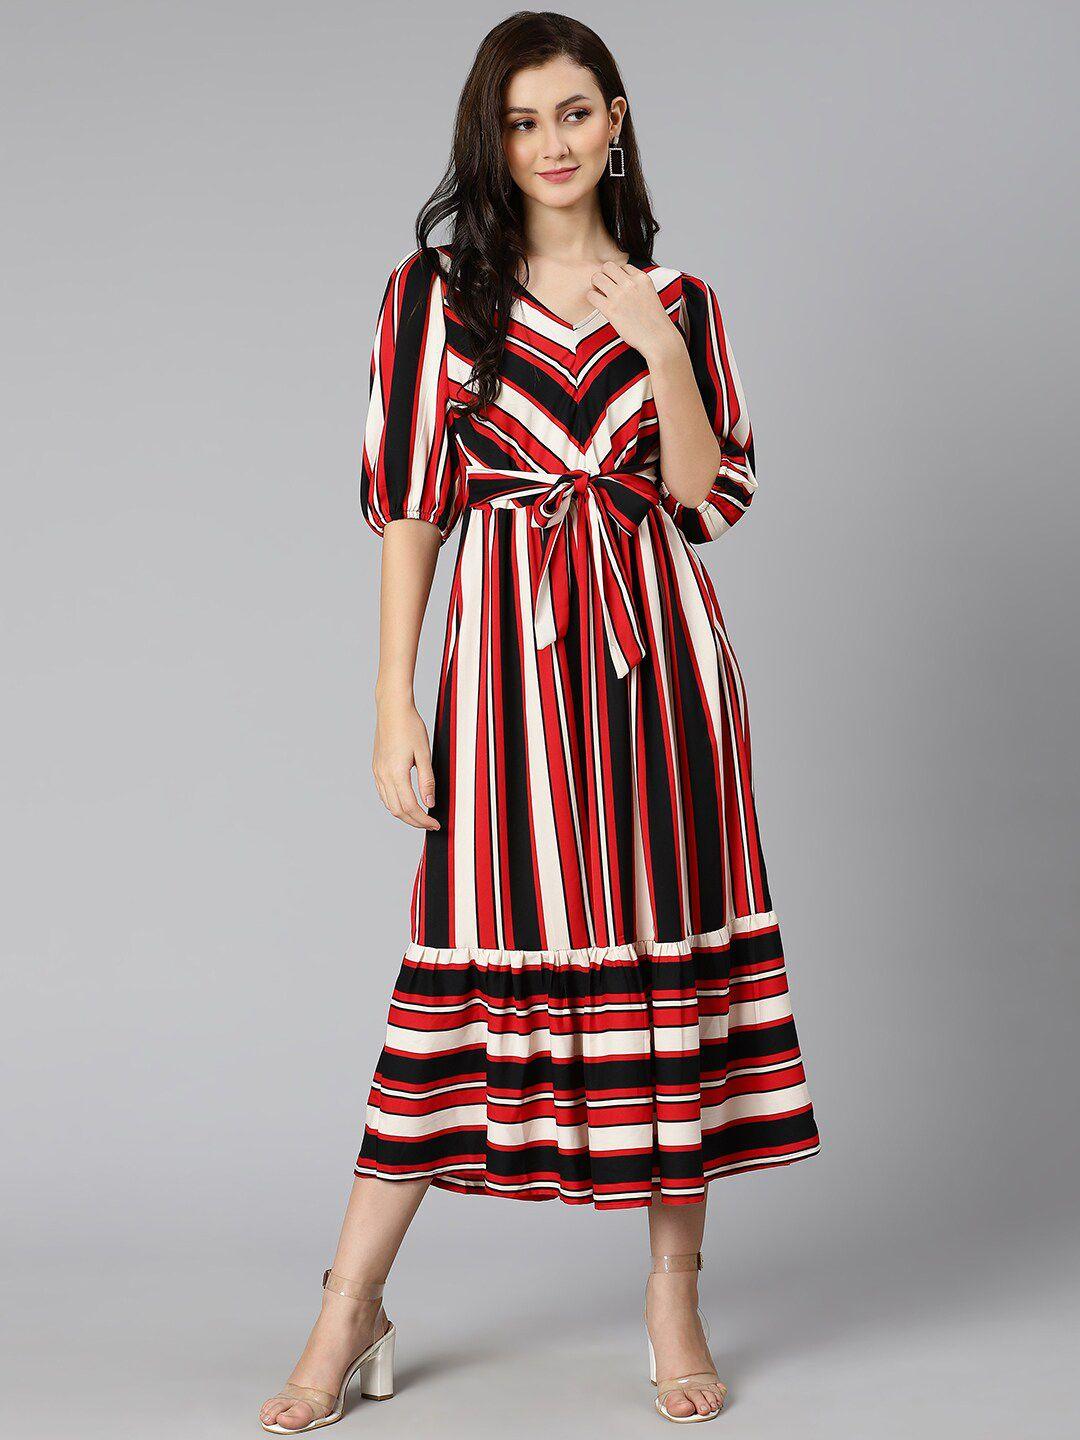 oxolloxo-women-red-&-black-striped-satin-midi-dress